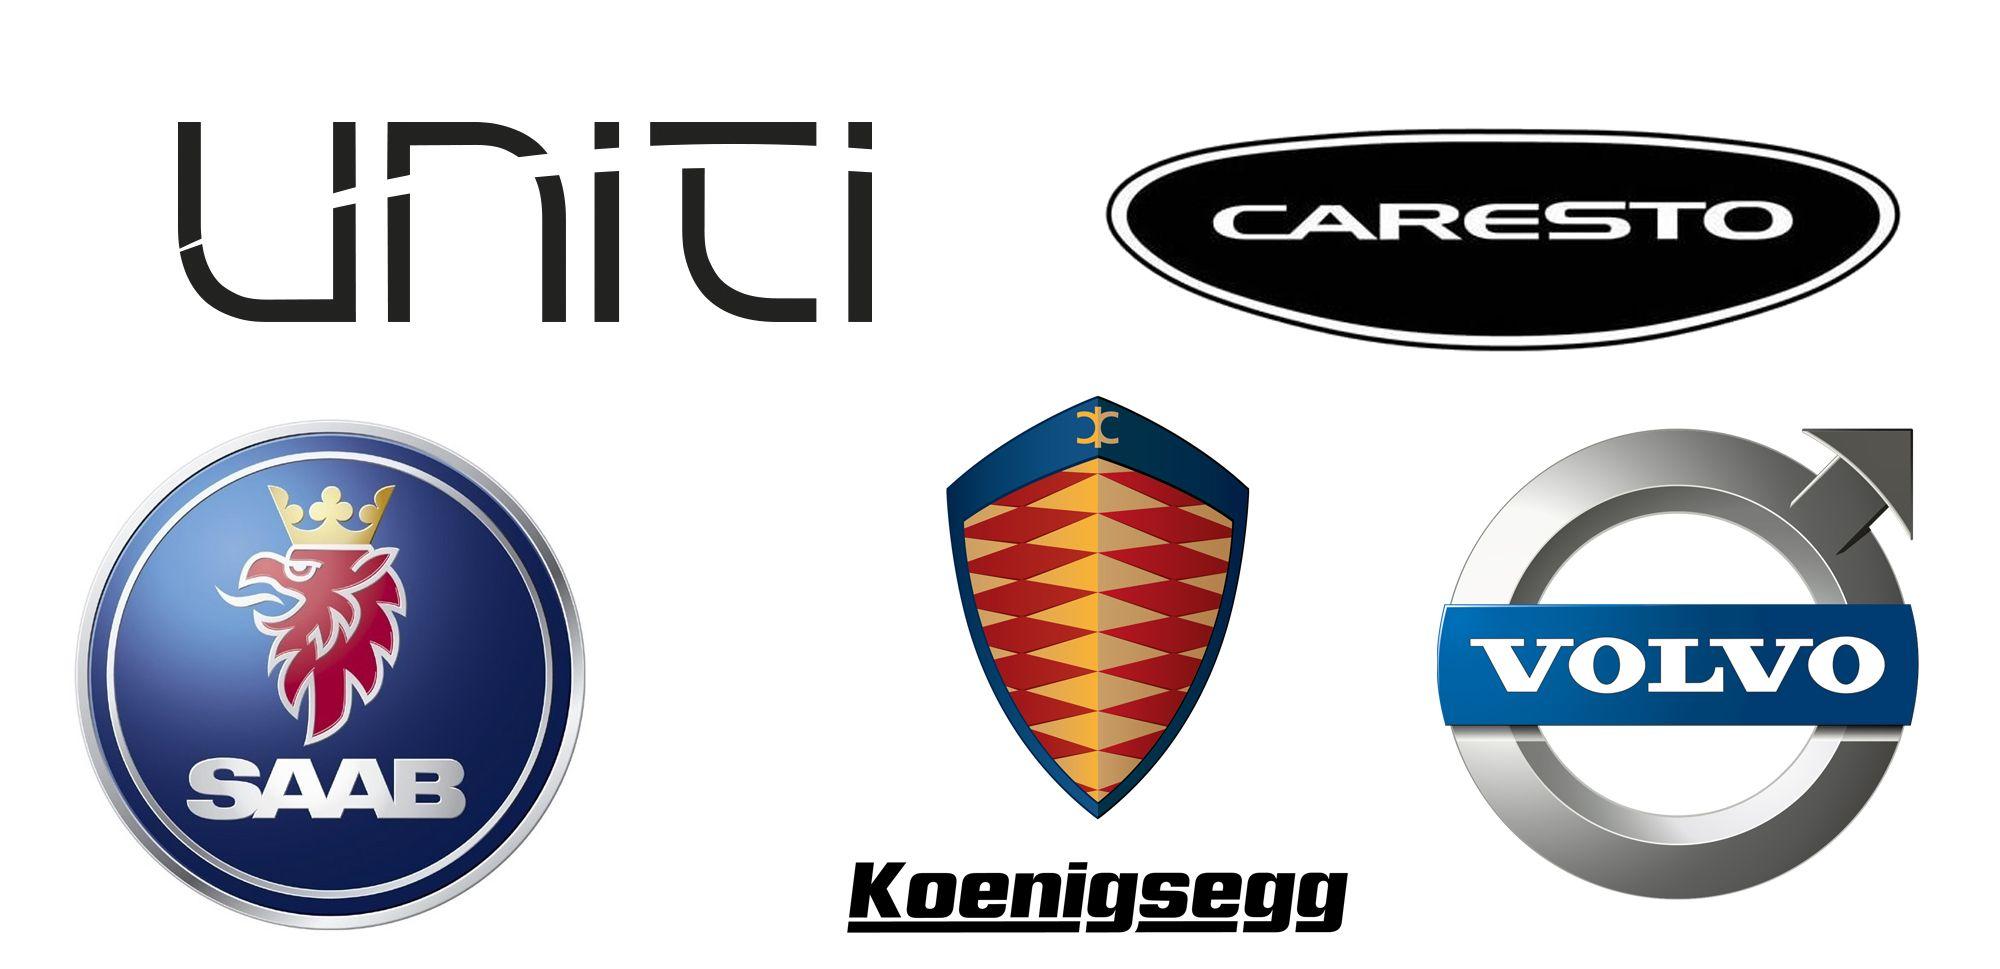 Swedish Car Logo - List of all Swedish Car Brands | World Cars Brands